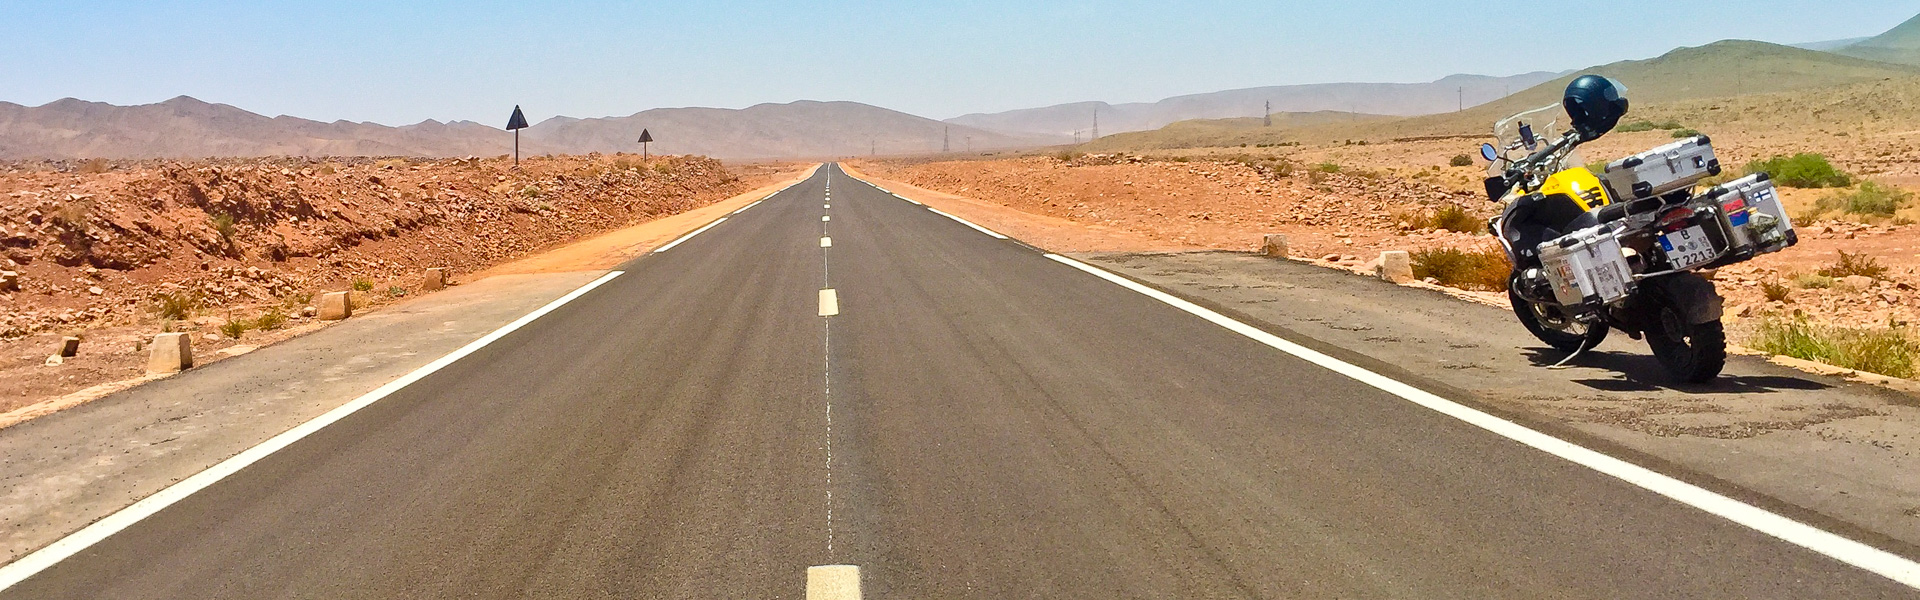 Road to Ouarzazate, Morocco